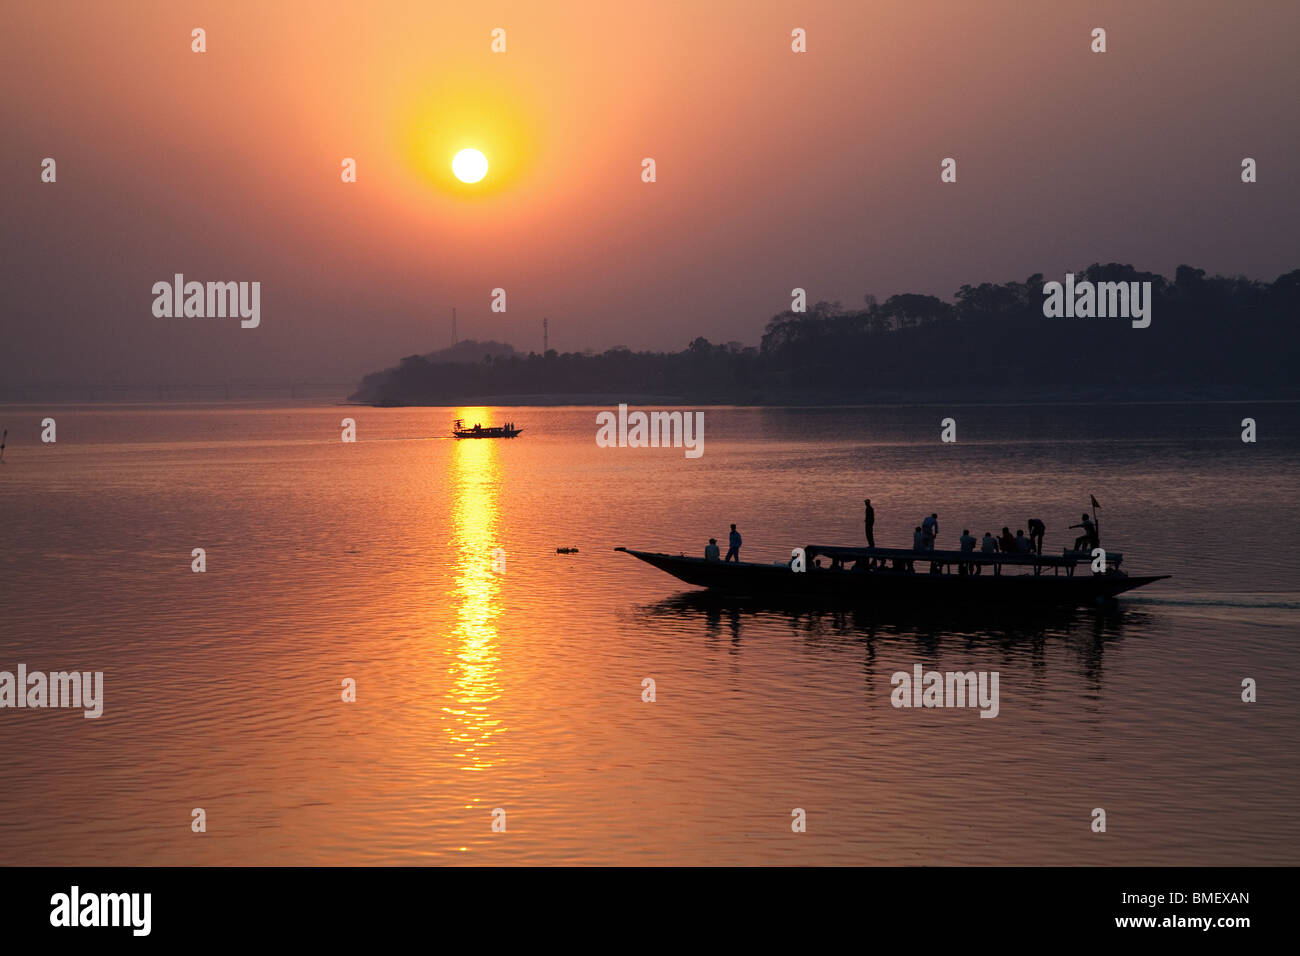 Sunset on Brahmaputra River with Passing Passenger Boat, Guwahati, Assam State, India Stock Photo